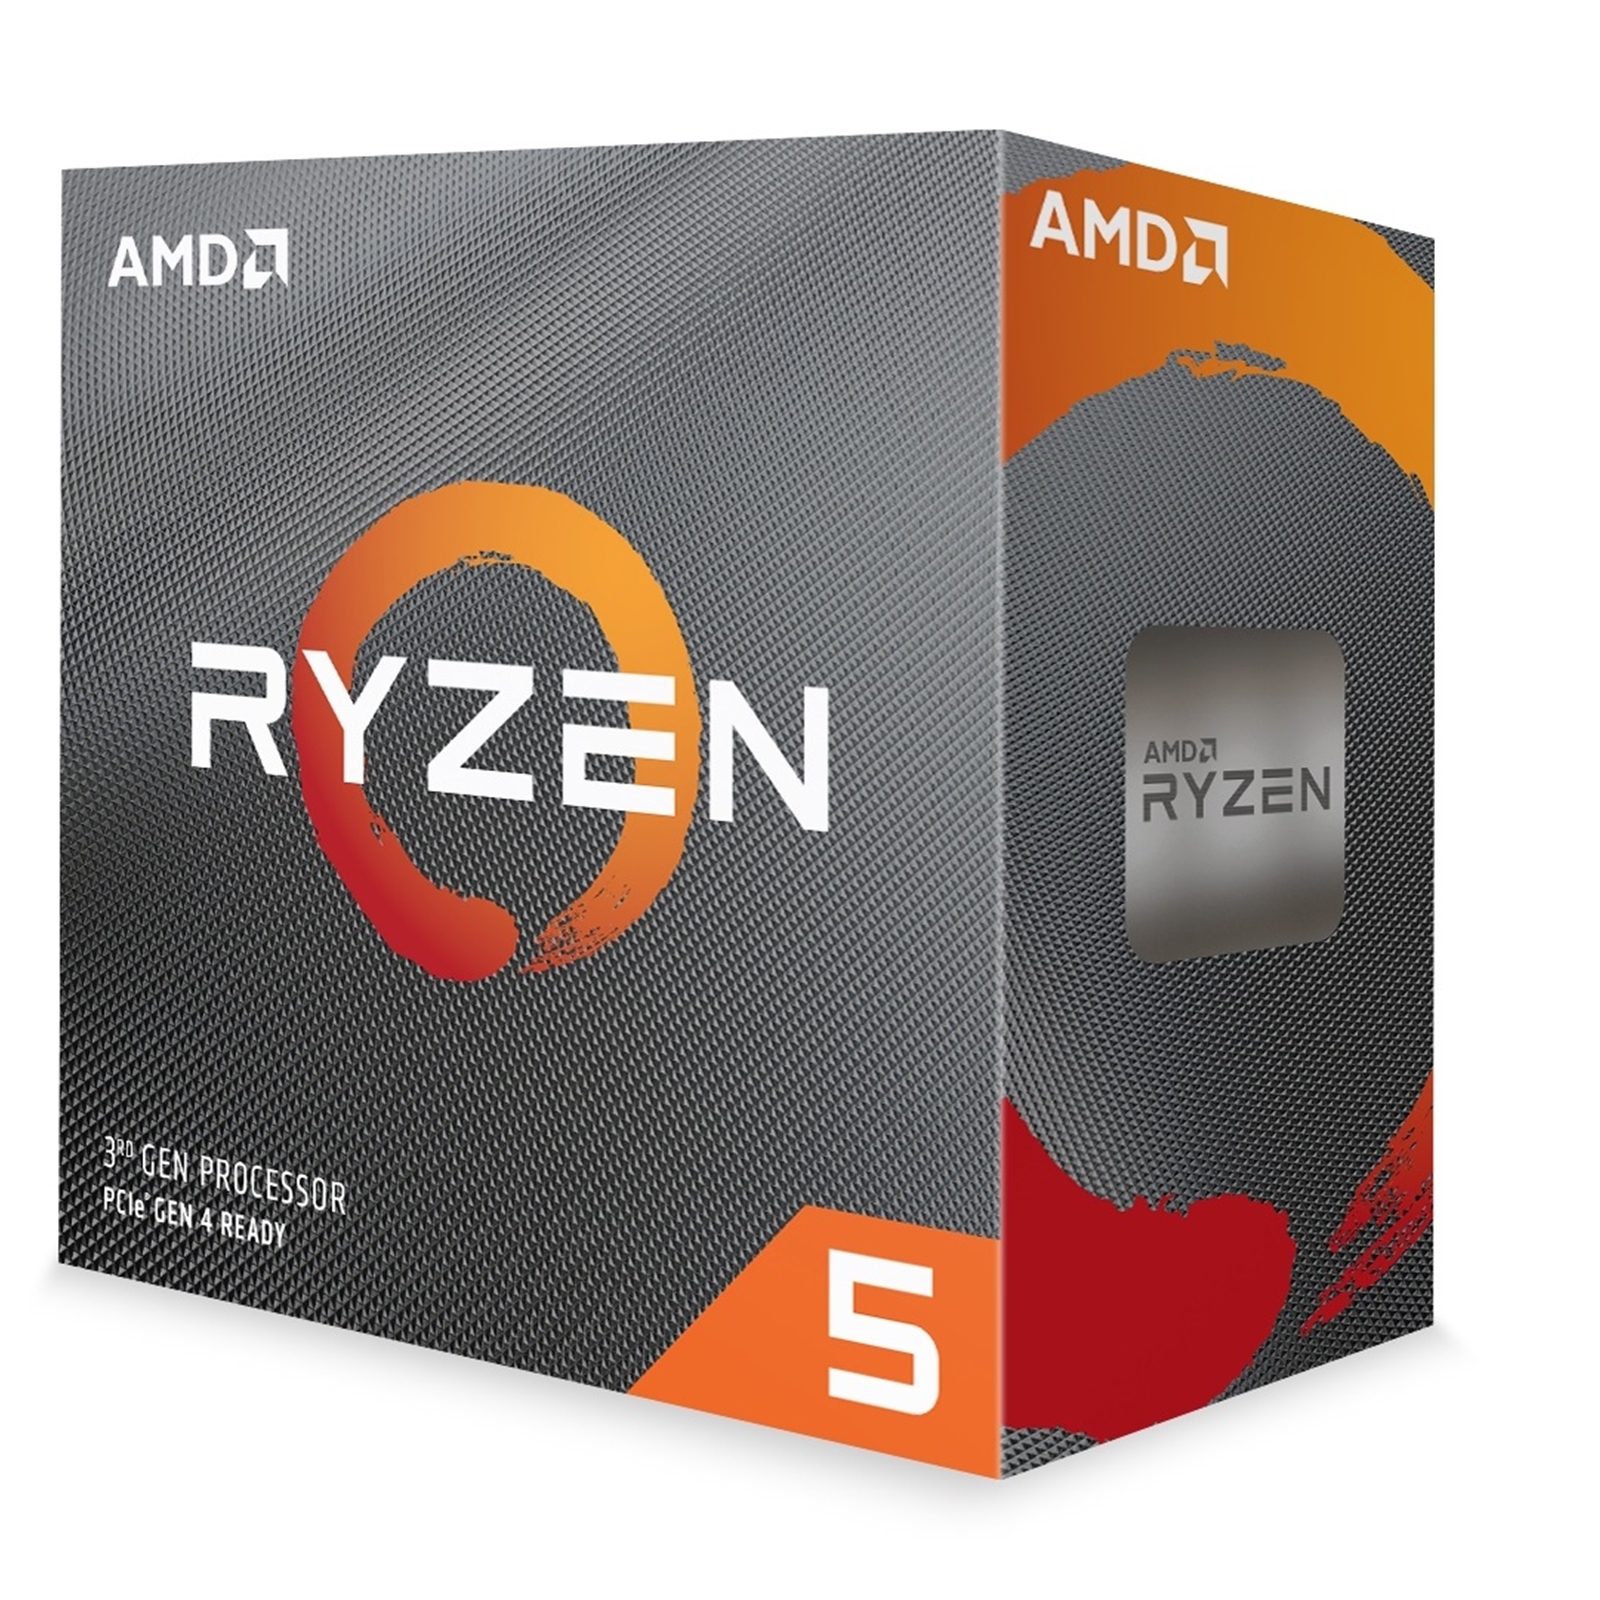 AMD Ryzen 5 3400G 3.7GHz 4 Core AM4 Processor, 8 Threads, 4.2GHz Boost, Radeon Vega 11 Graphics